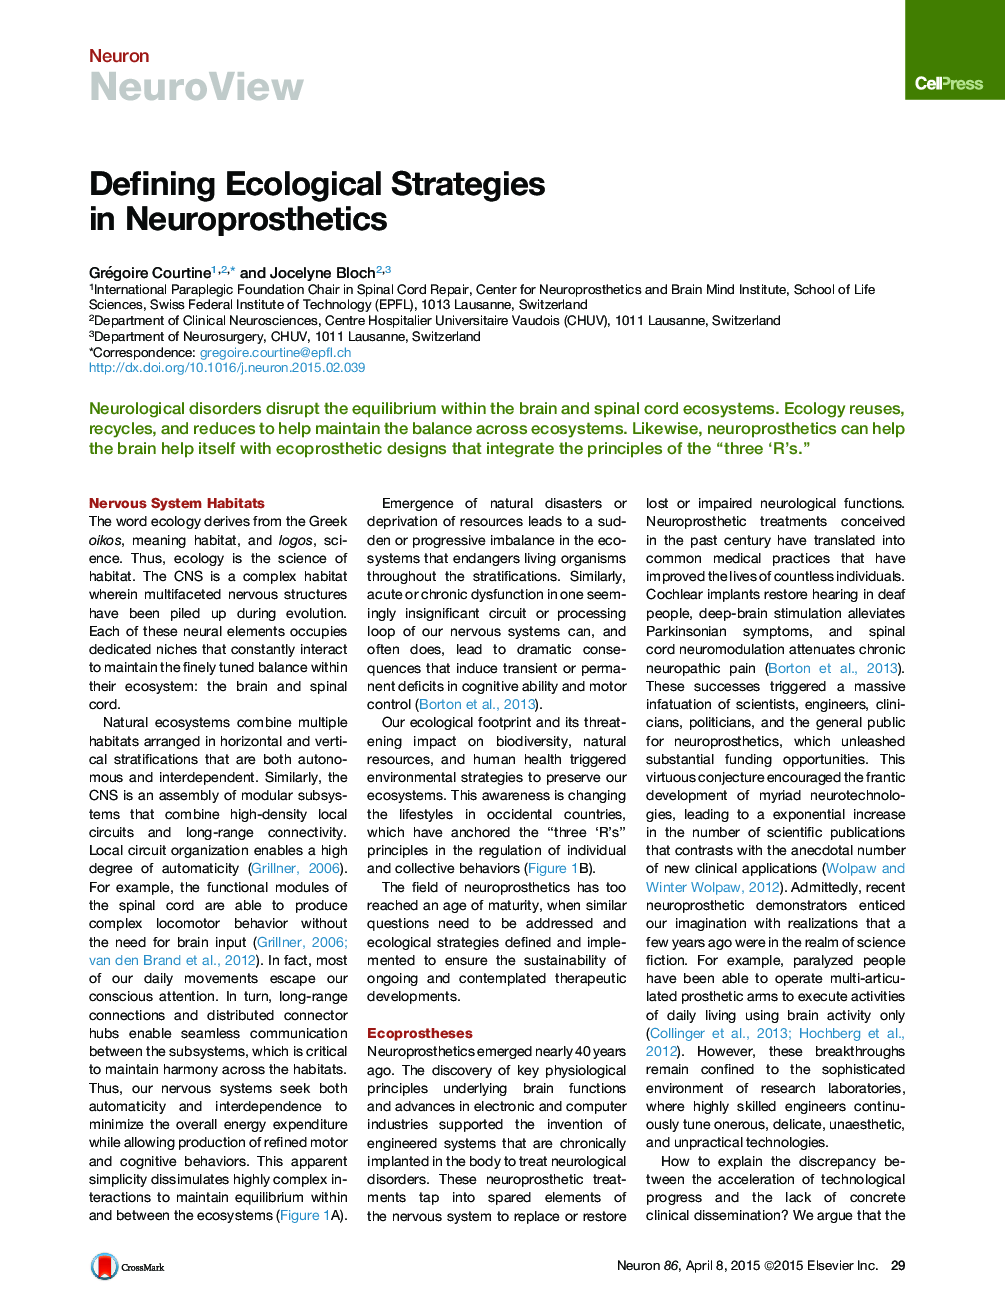 Defining Ecological Strategies in Neuroprosthetics